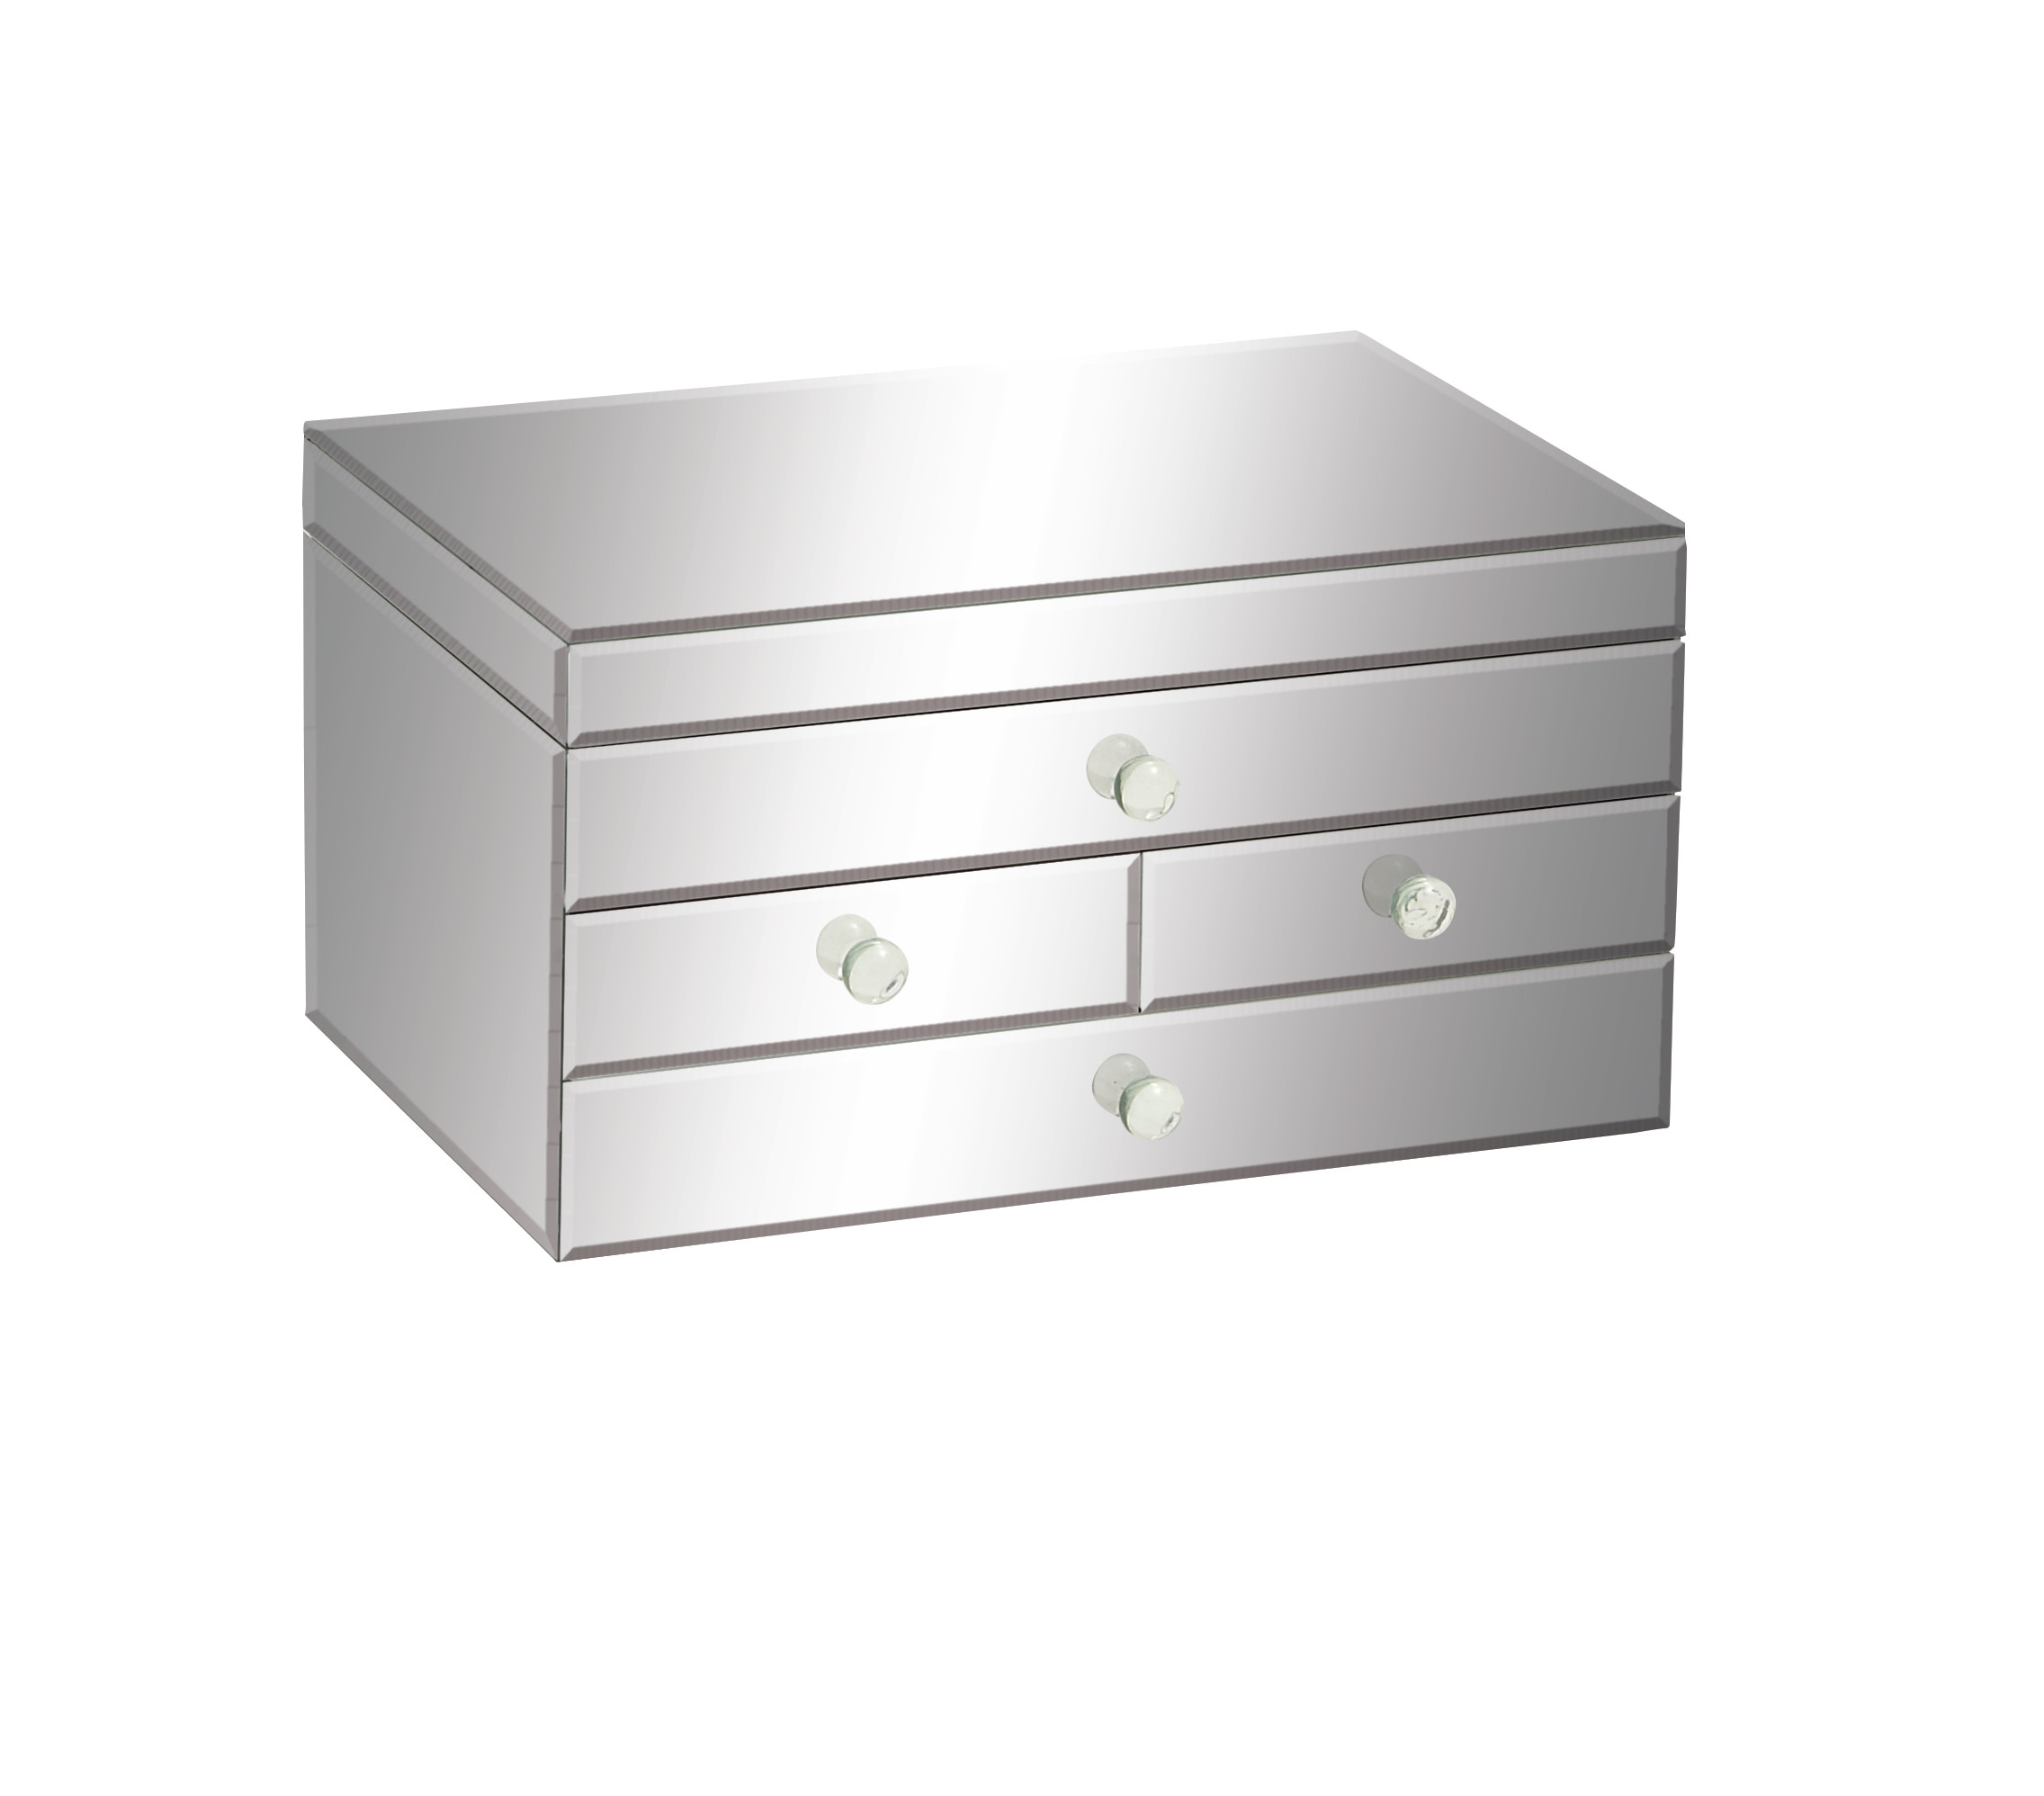 Mirrored Jewelry Box Organizer Armoire Cabinet - White